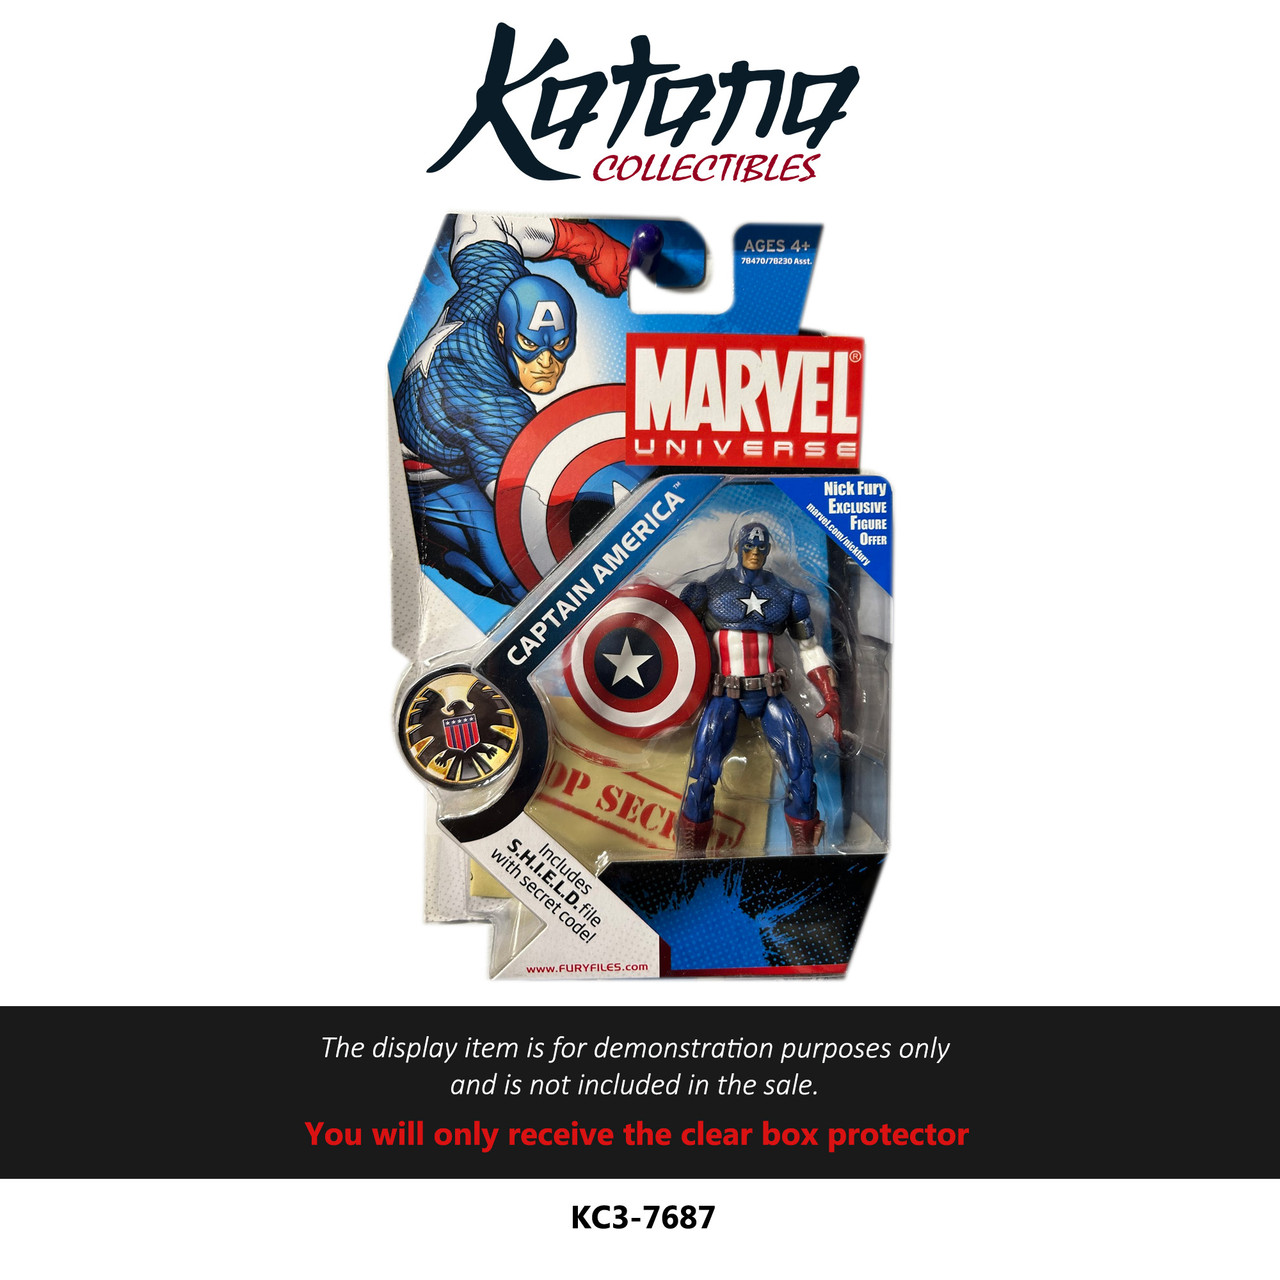 Katana Collectibles Protector For Marvel Universe - Captain America